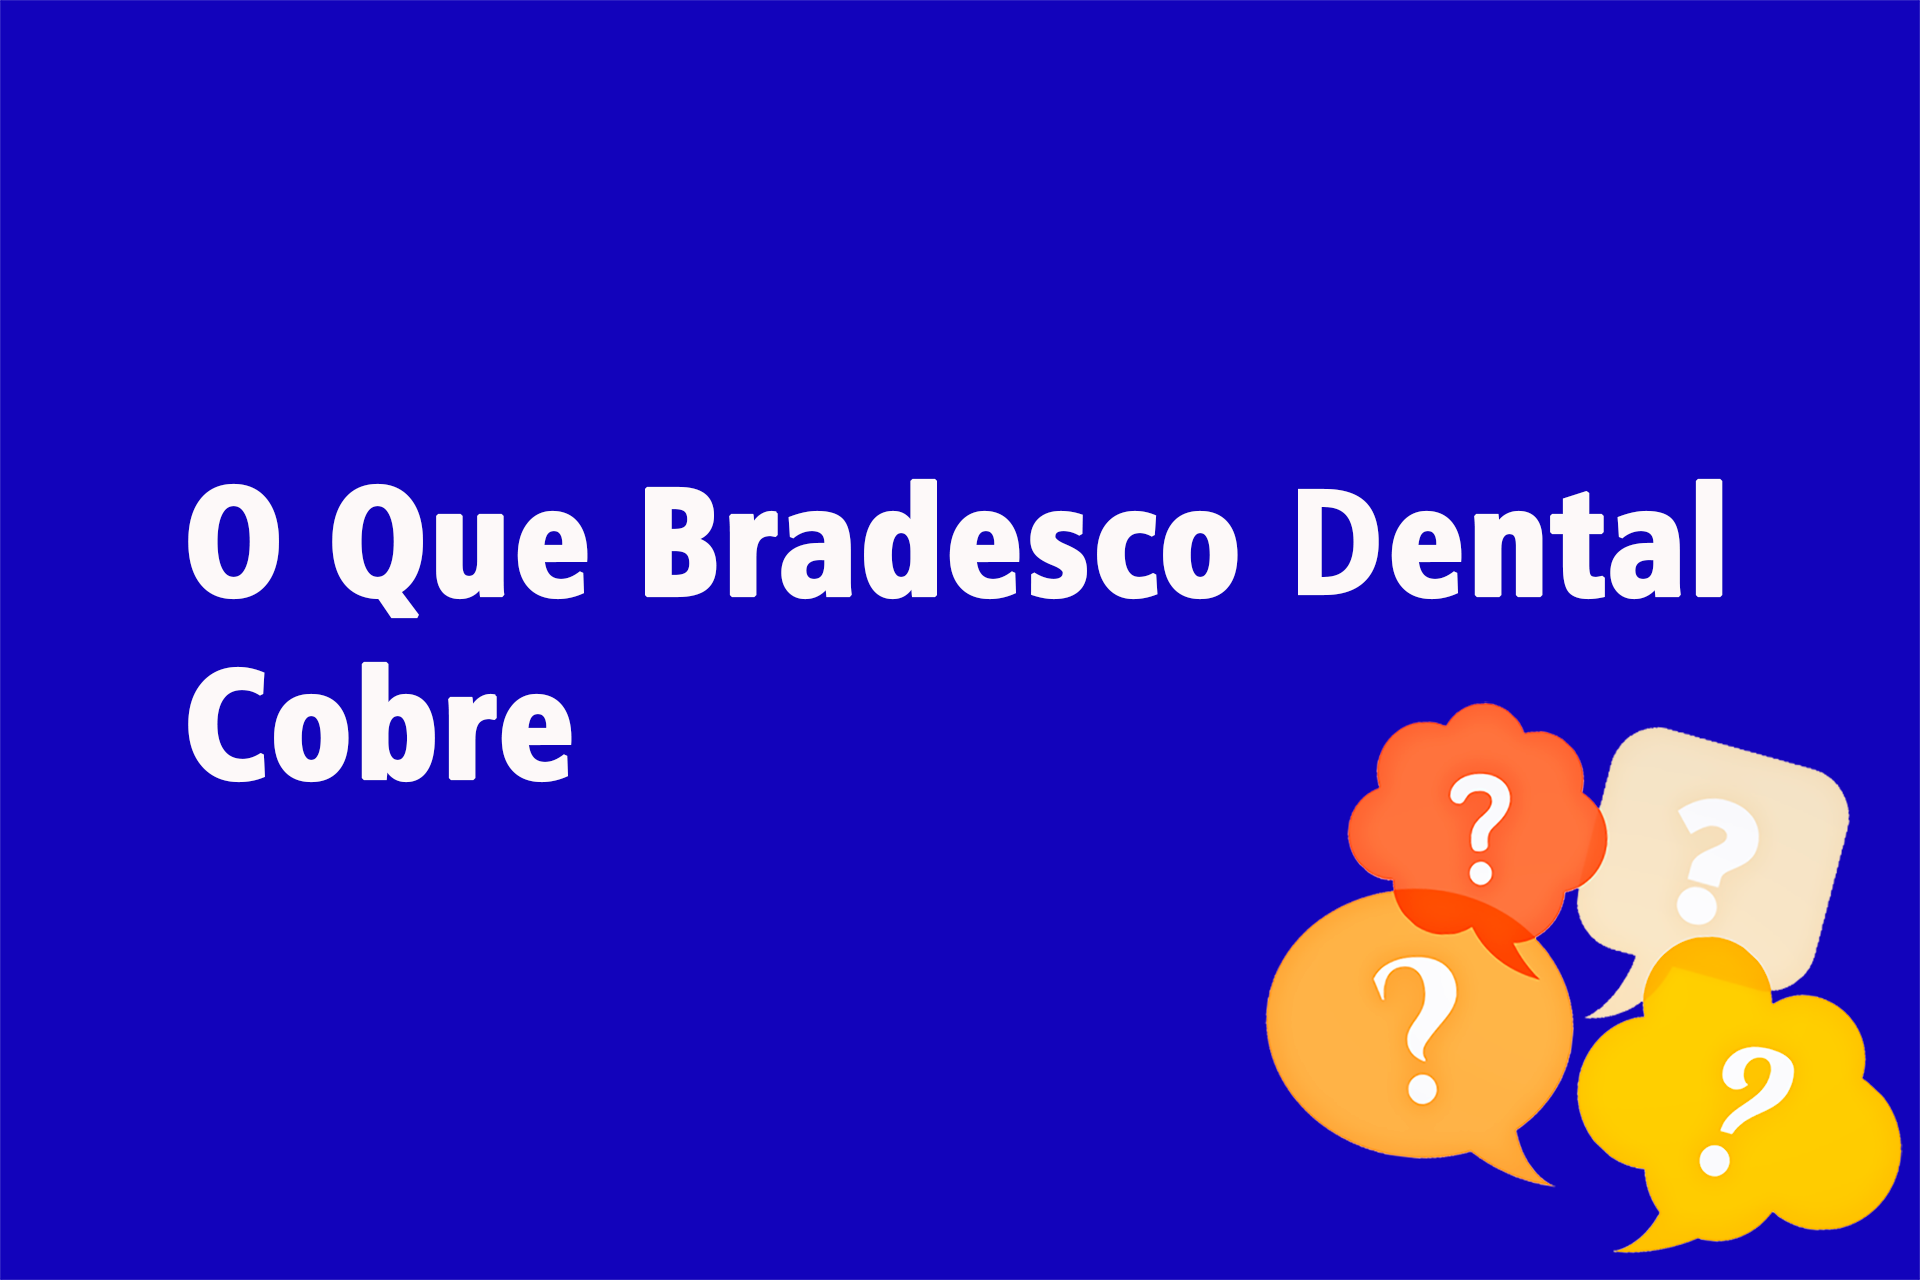 O Que Bradesco Dental Cobre?